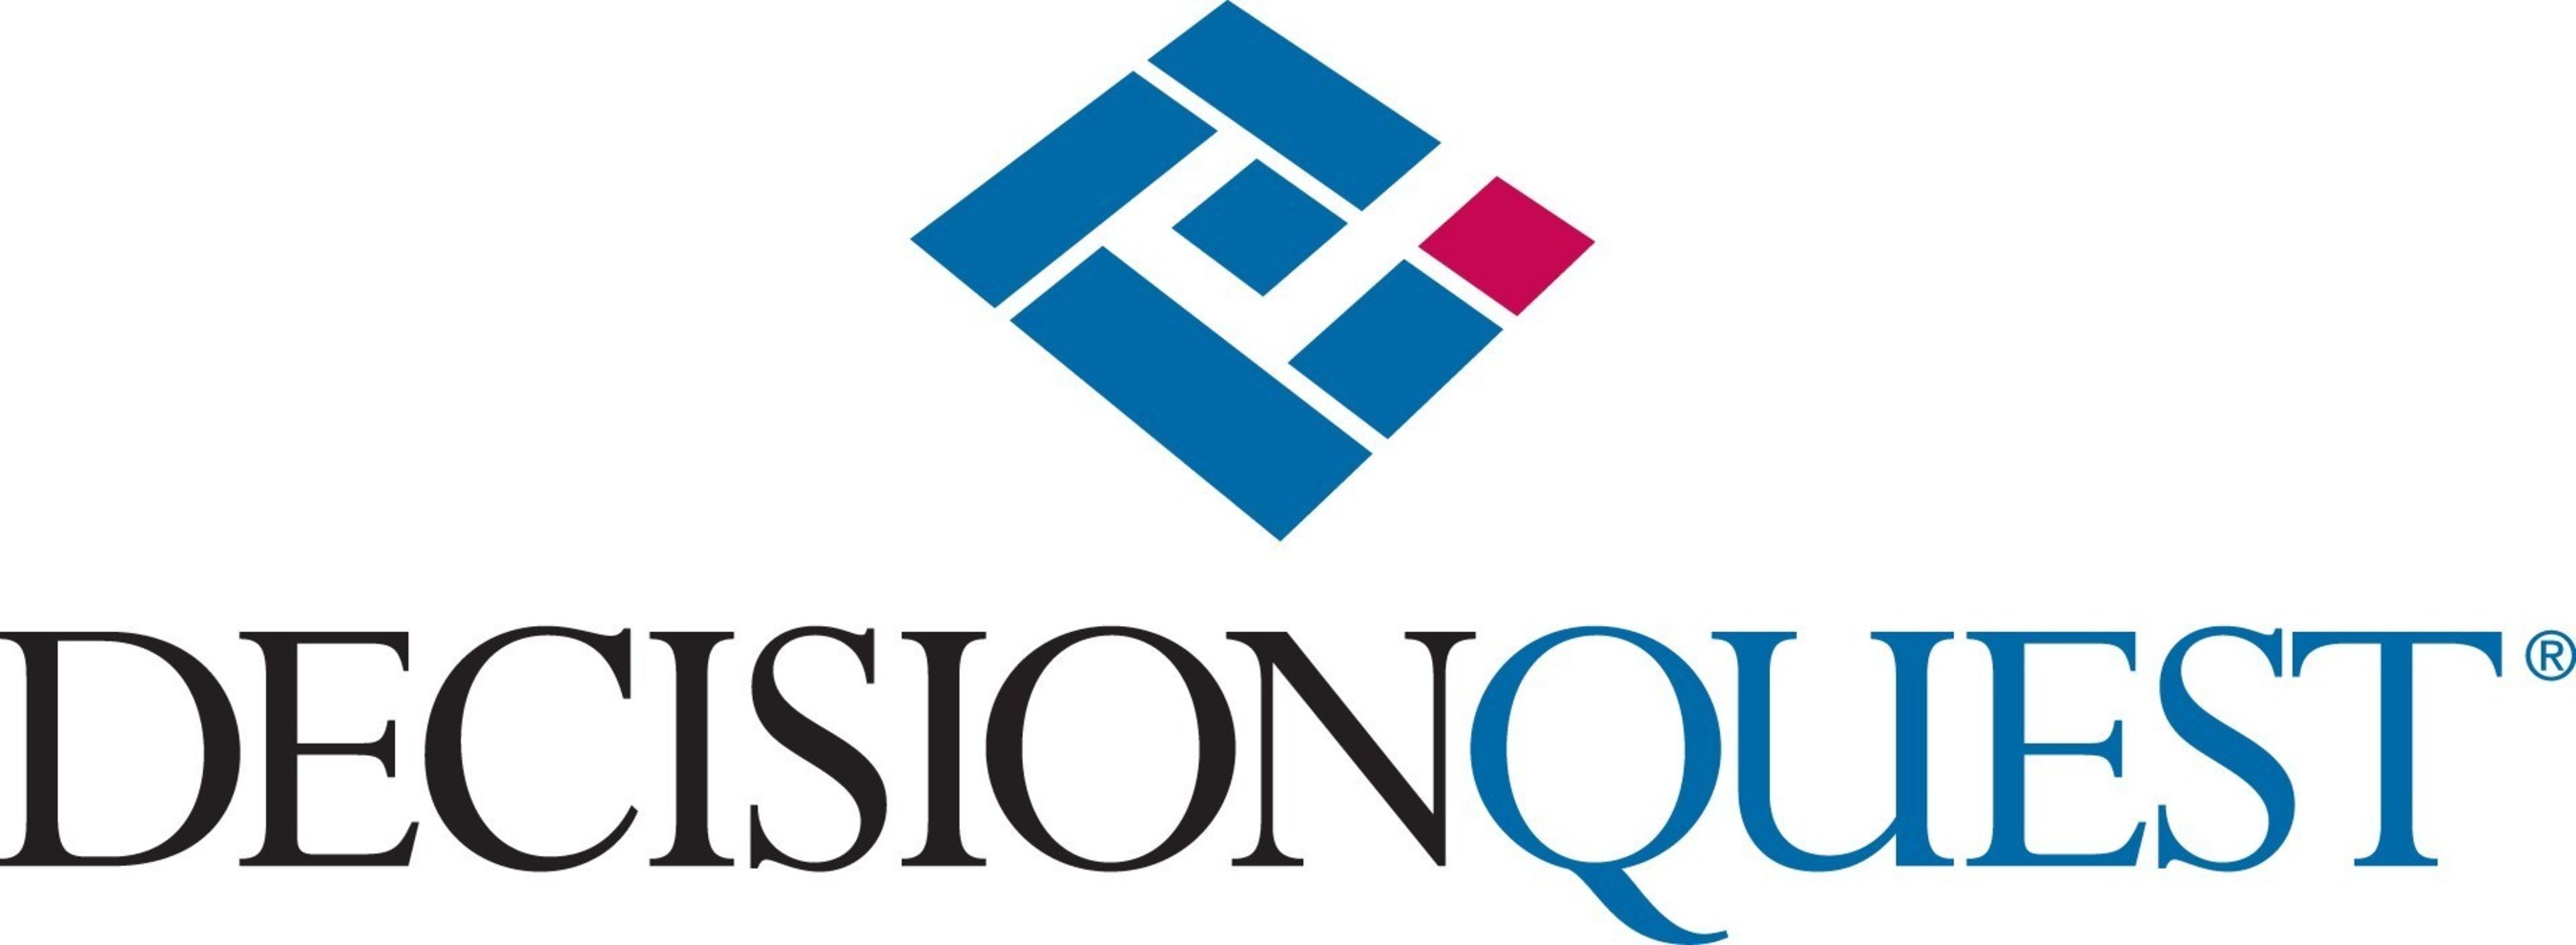 DecisionQuest, Inc. company logo